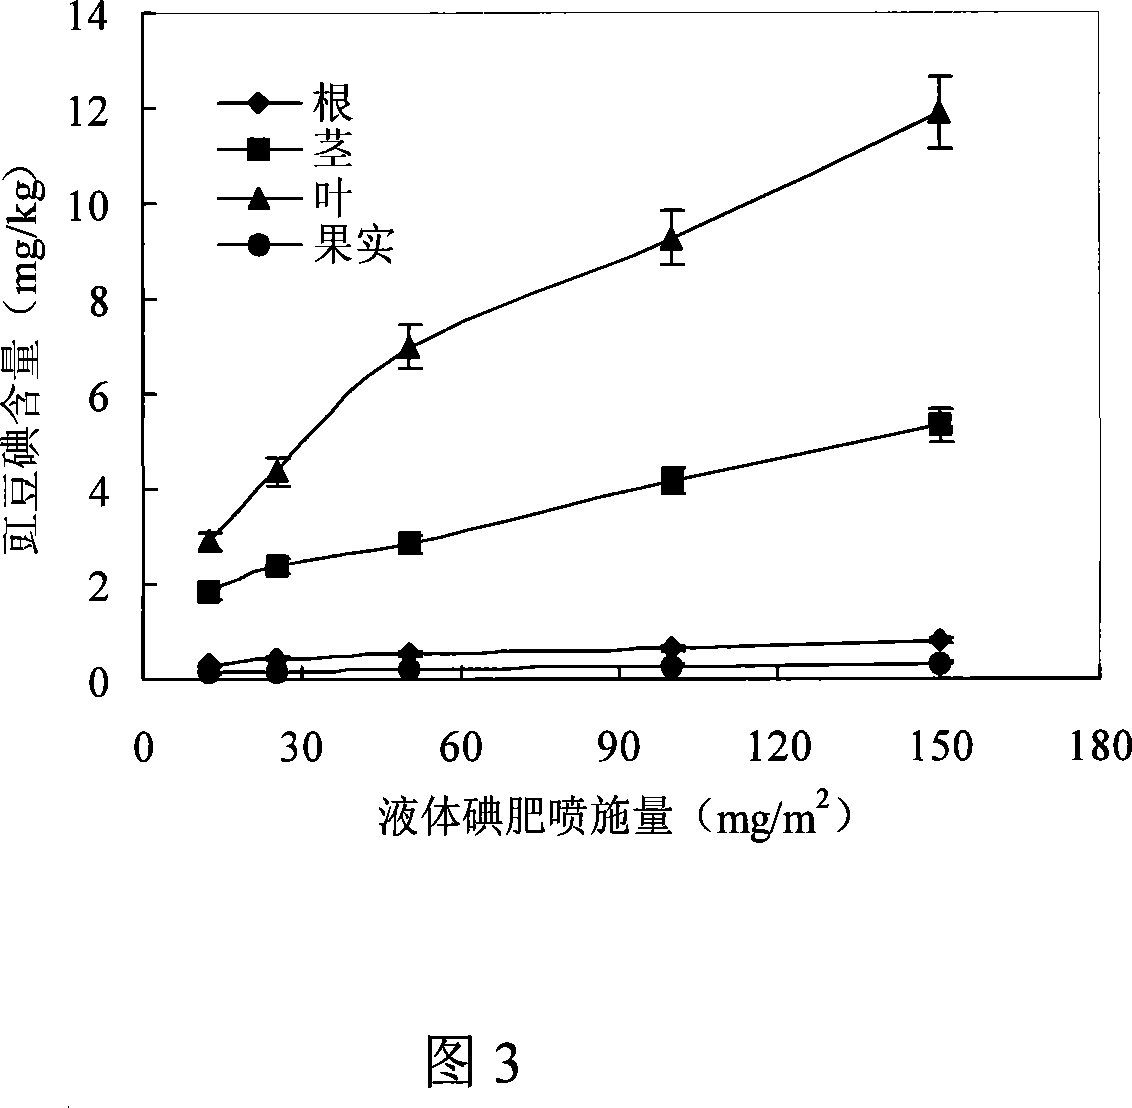 Method for planting vigna containing iodine